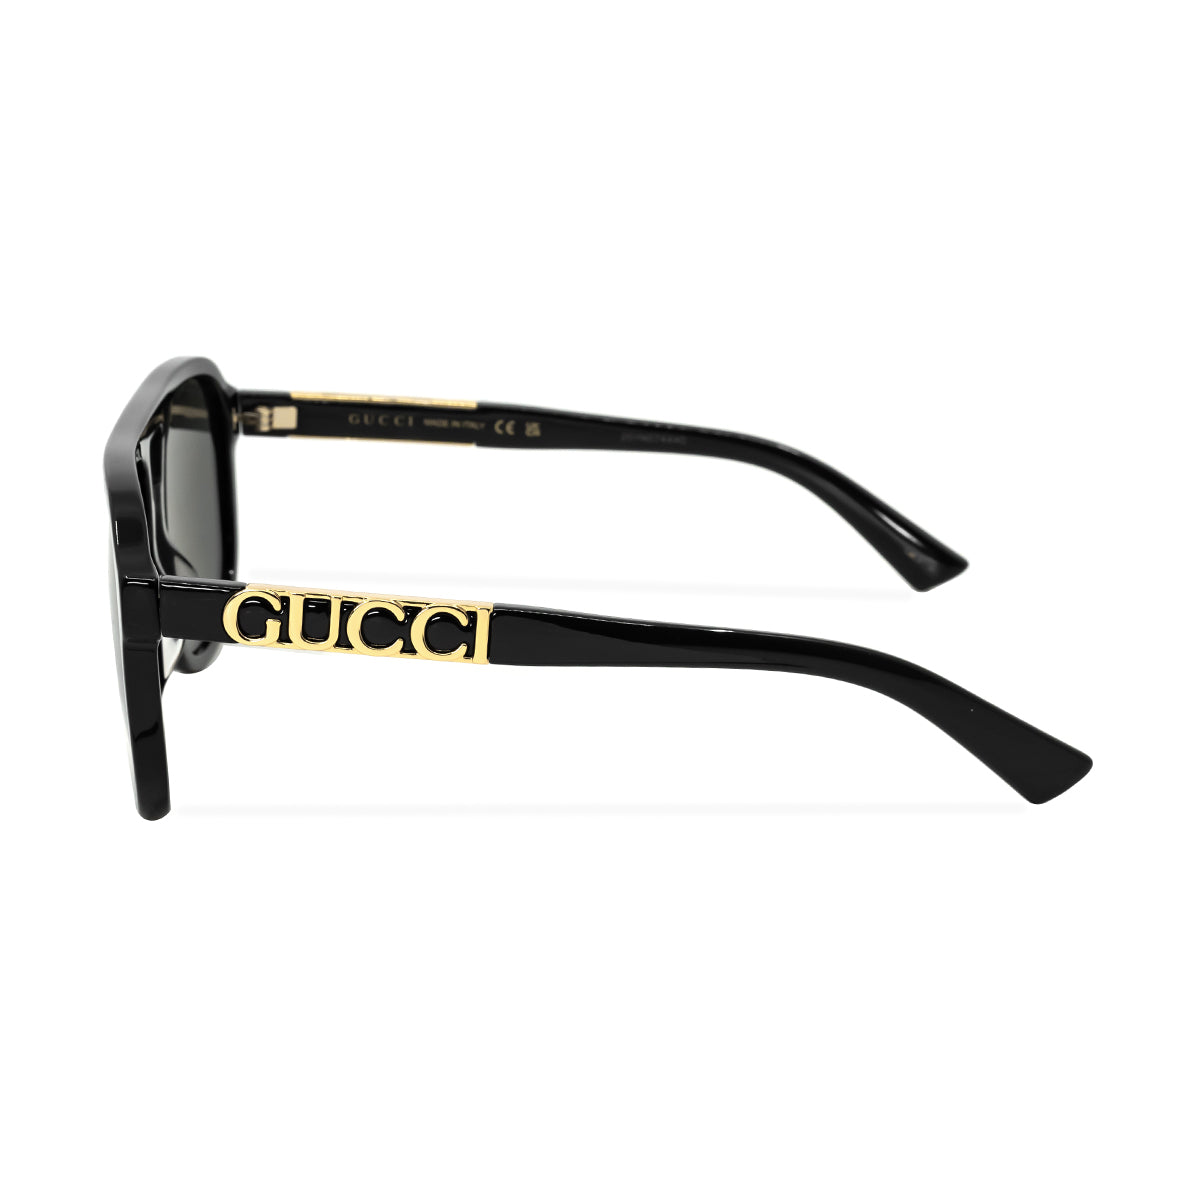 Gucci Sunglasses - black/black/grey/black - Zalando.co.uk